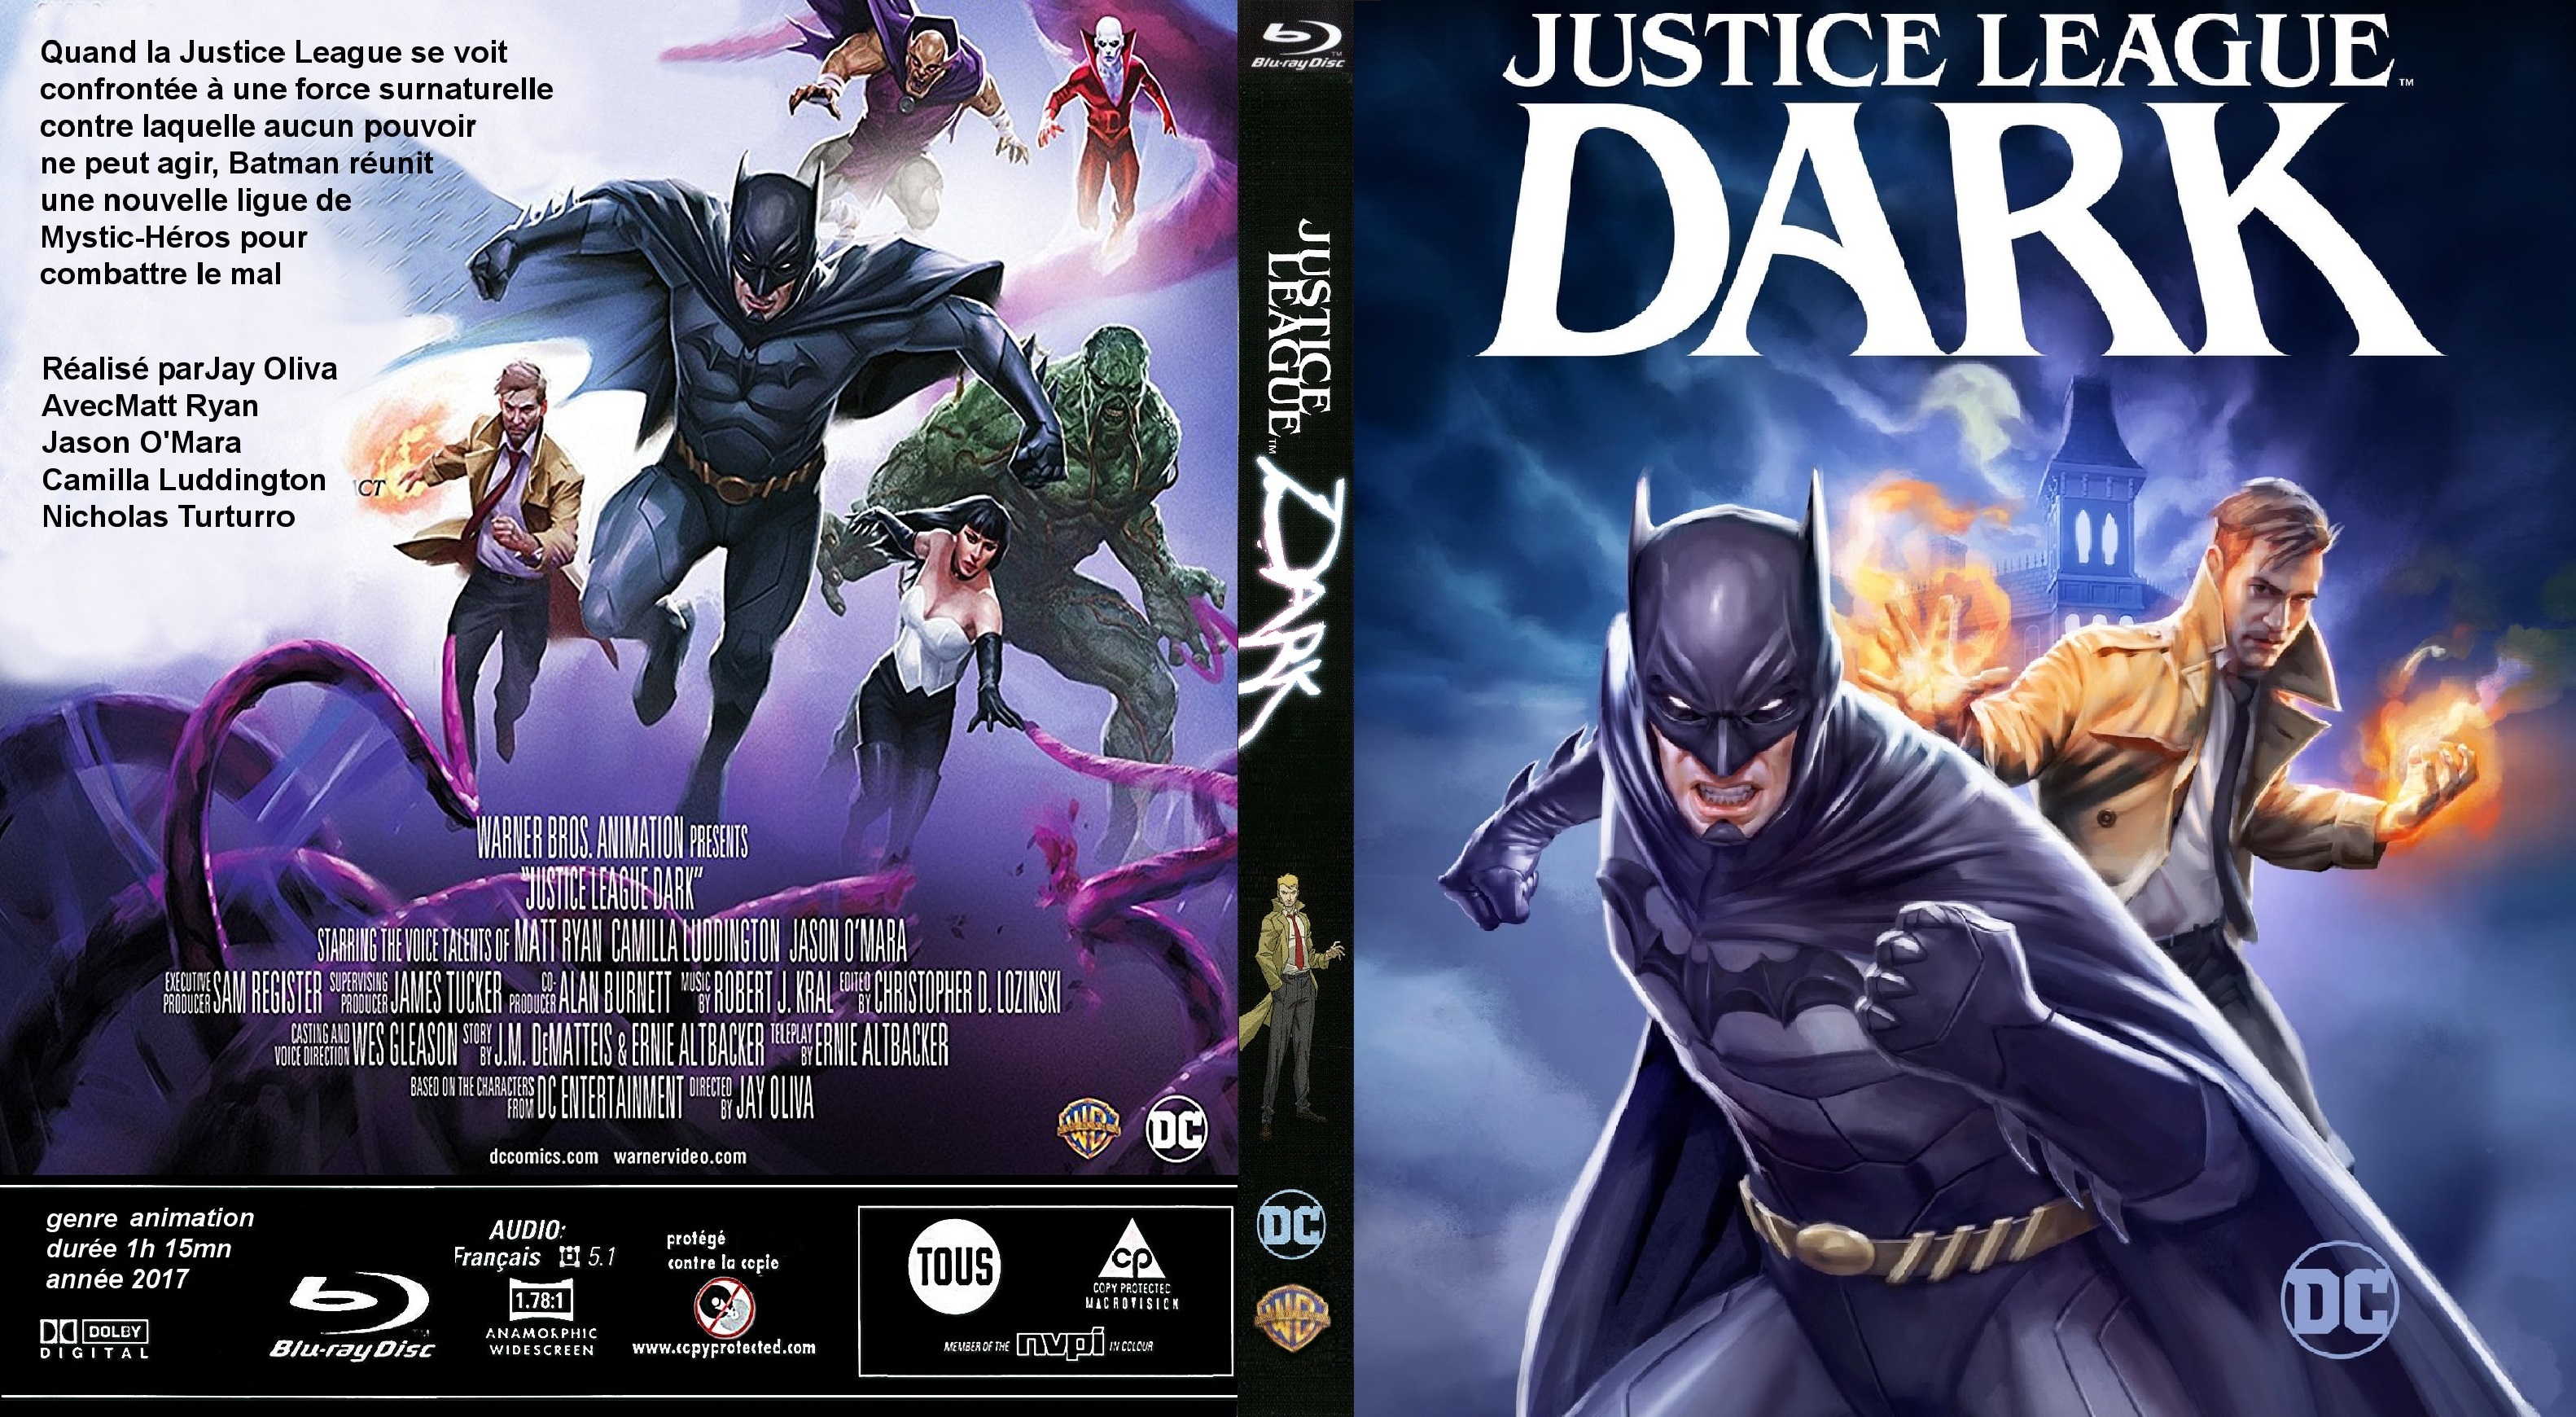 Jaquette DVD Justice League Dark custom (BLU-RAY)